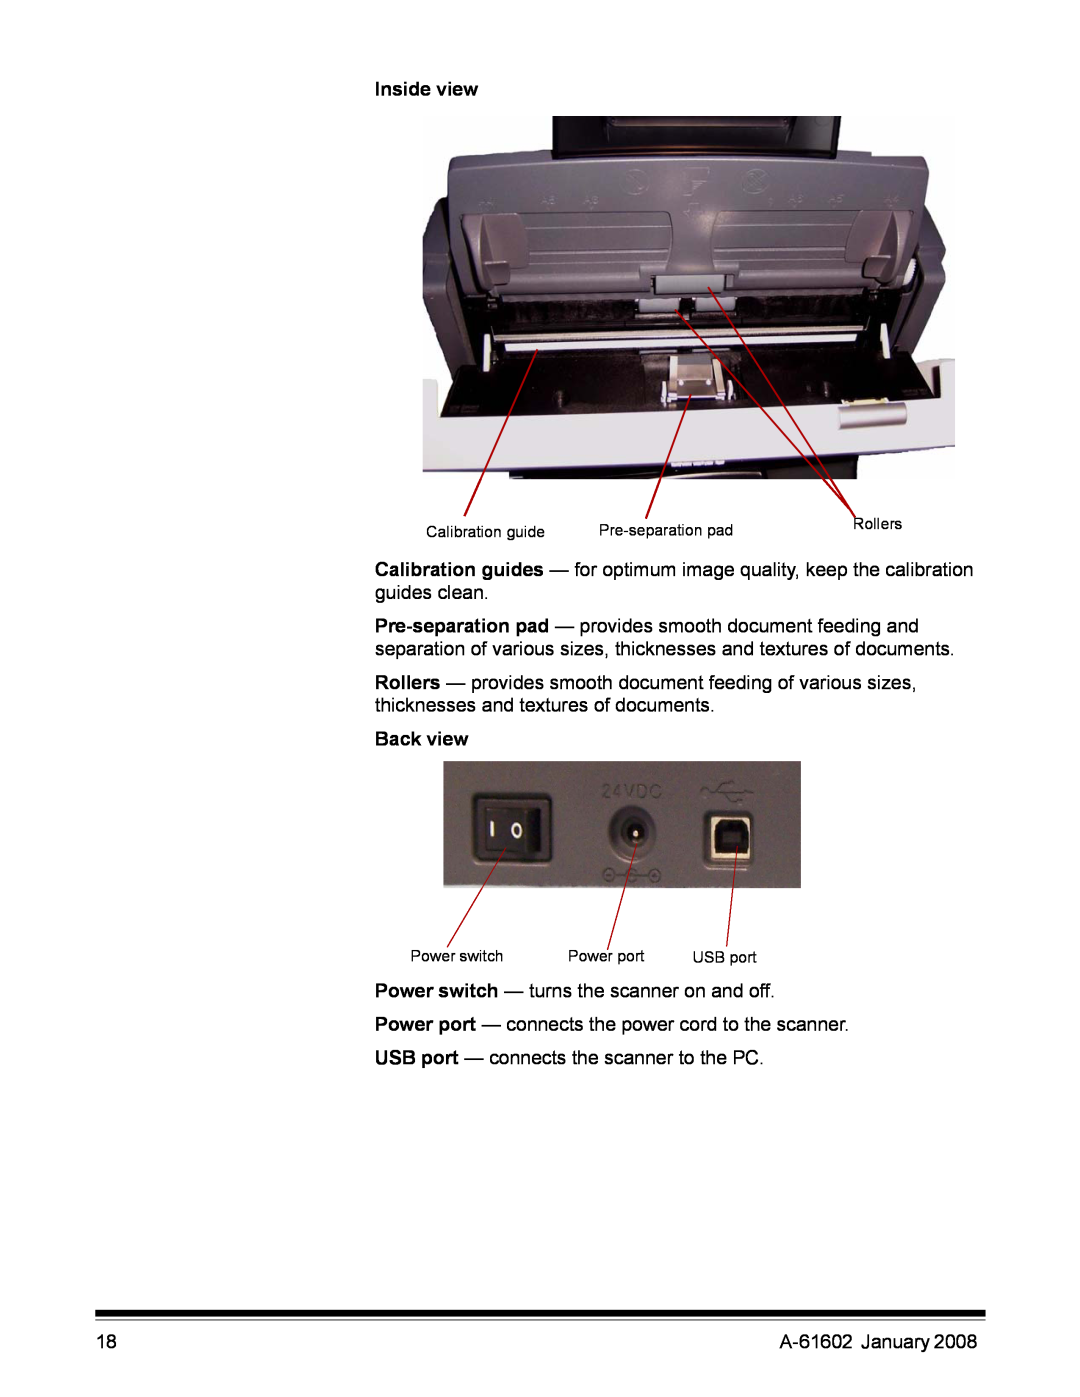 Kodak A-61602 manual Inside view, Back view, Calibration guide, Pre-separation pad, Power switch, Power port, USB port 